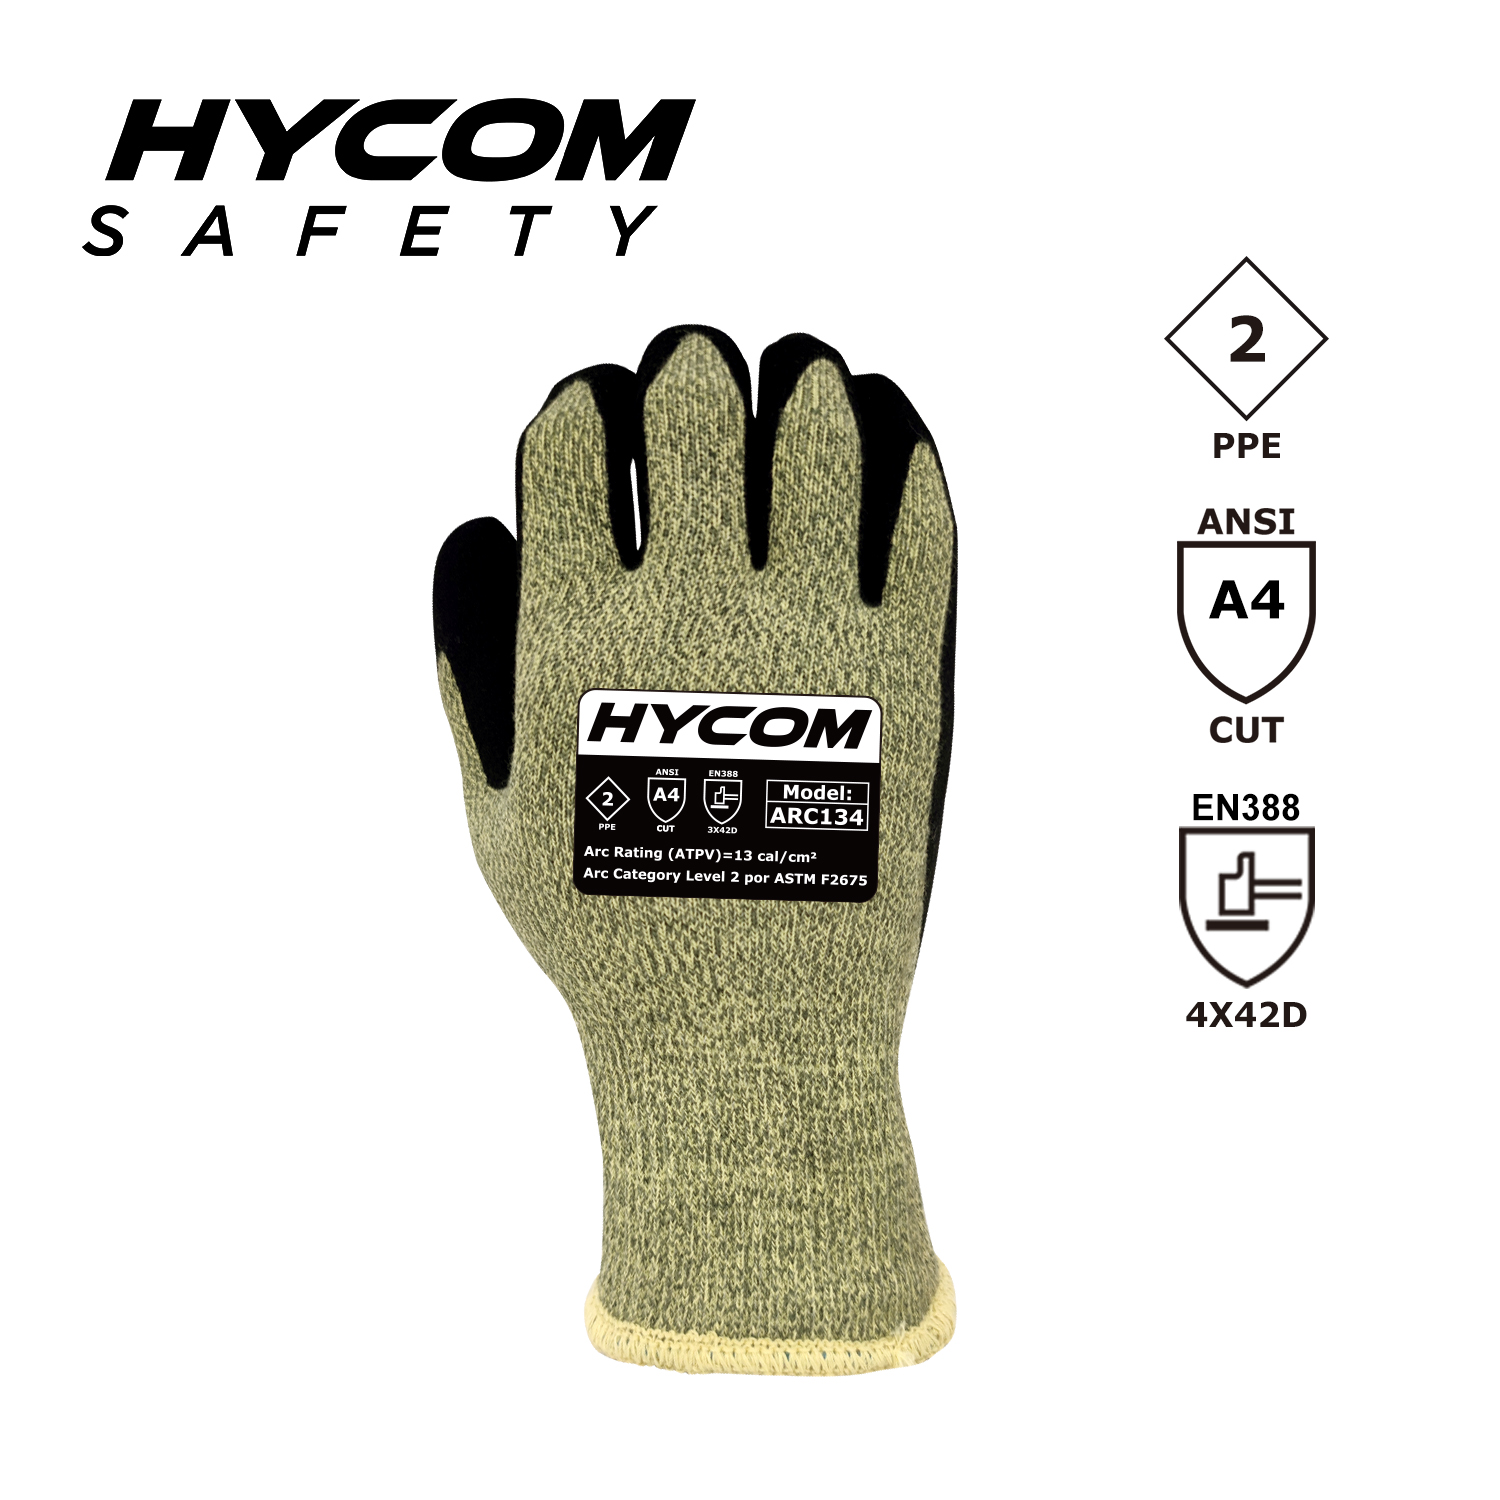 HYCOM Arc Flash Cut Resistant Aramid Glove with Neoprene Coating ATPV 13cal/cm² ppe Gloves